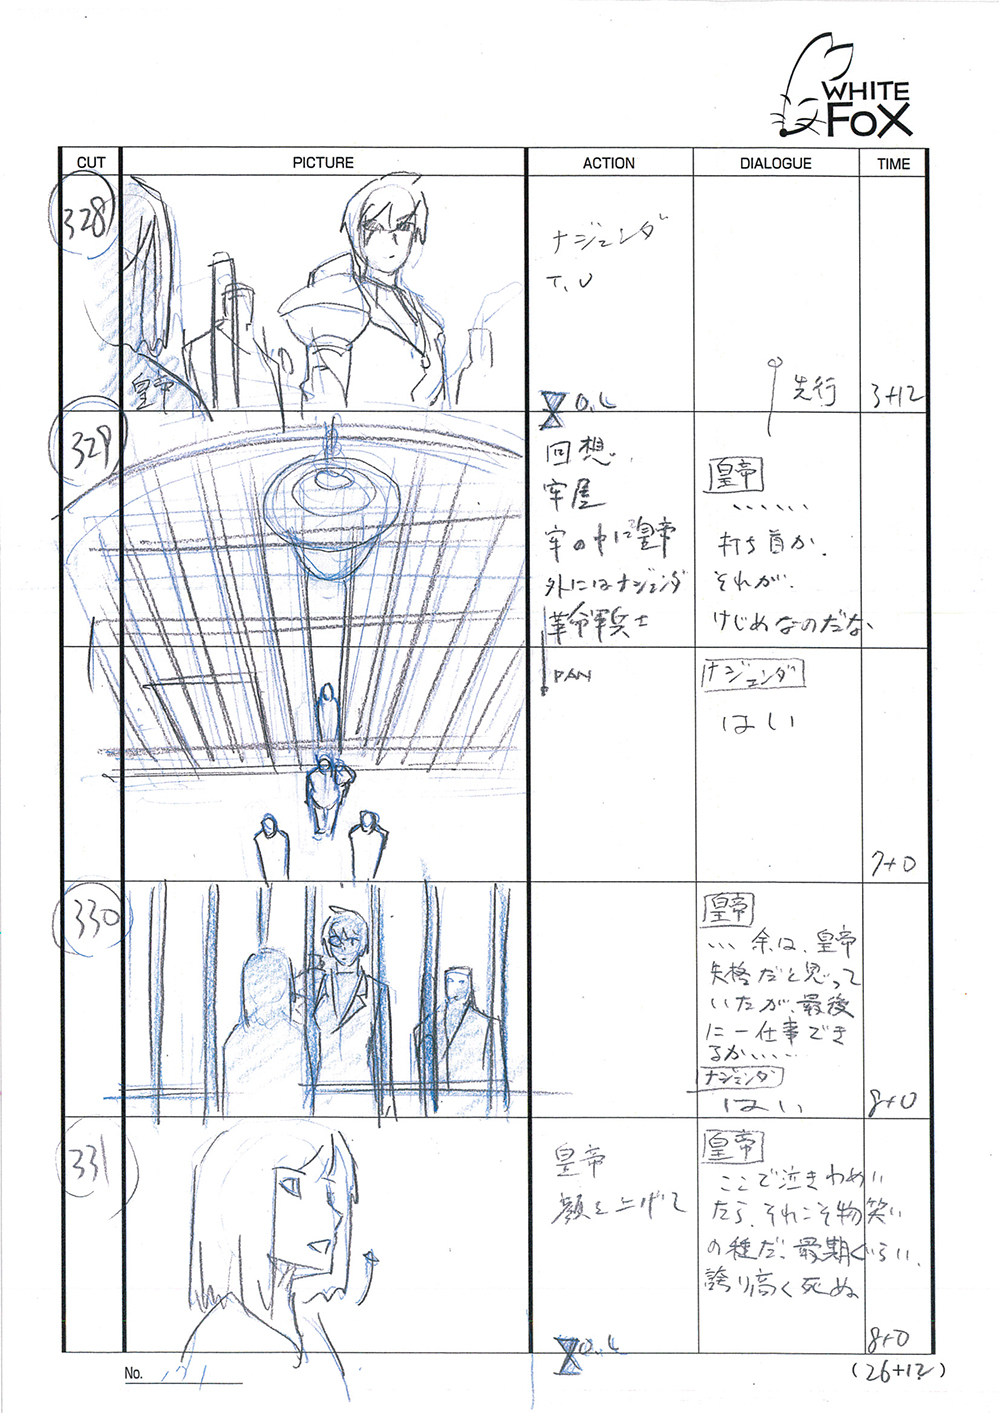 Akame ga Kill Episode 24 Storyboard Leak 176